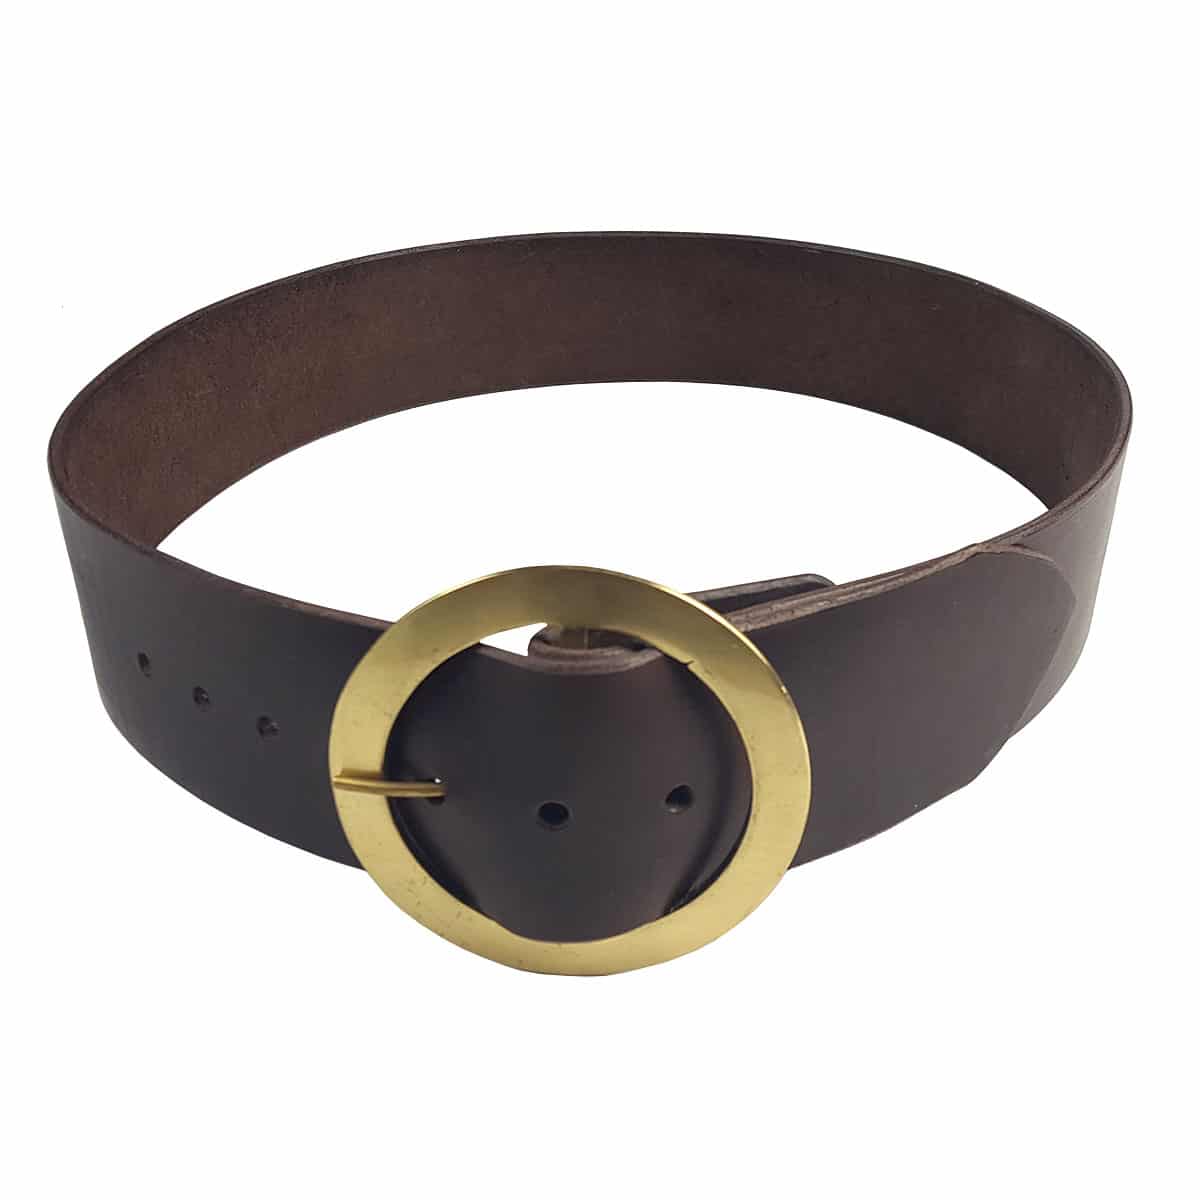 Kilt Belt, Double Buckle Belt, Chocolate Brown, Wide Leather Belt with  Brass, Nickel or Black Hardware